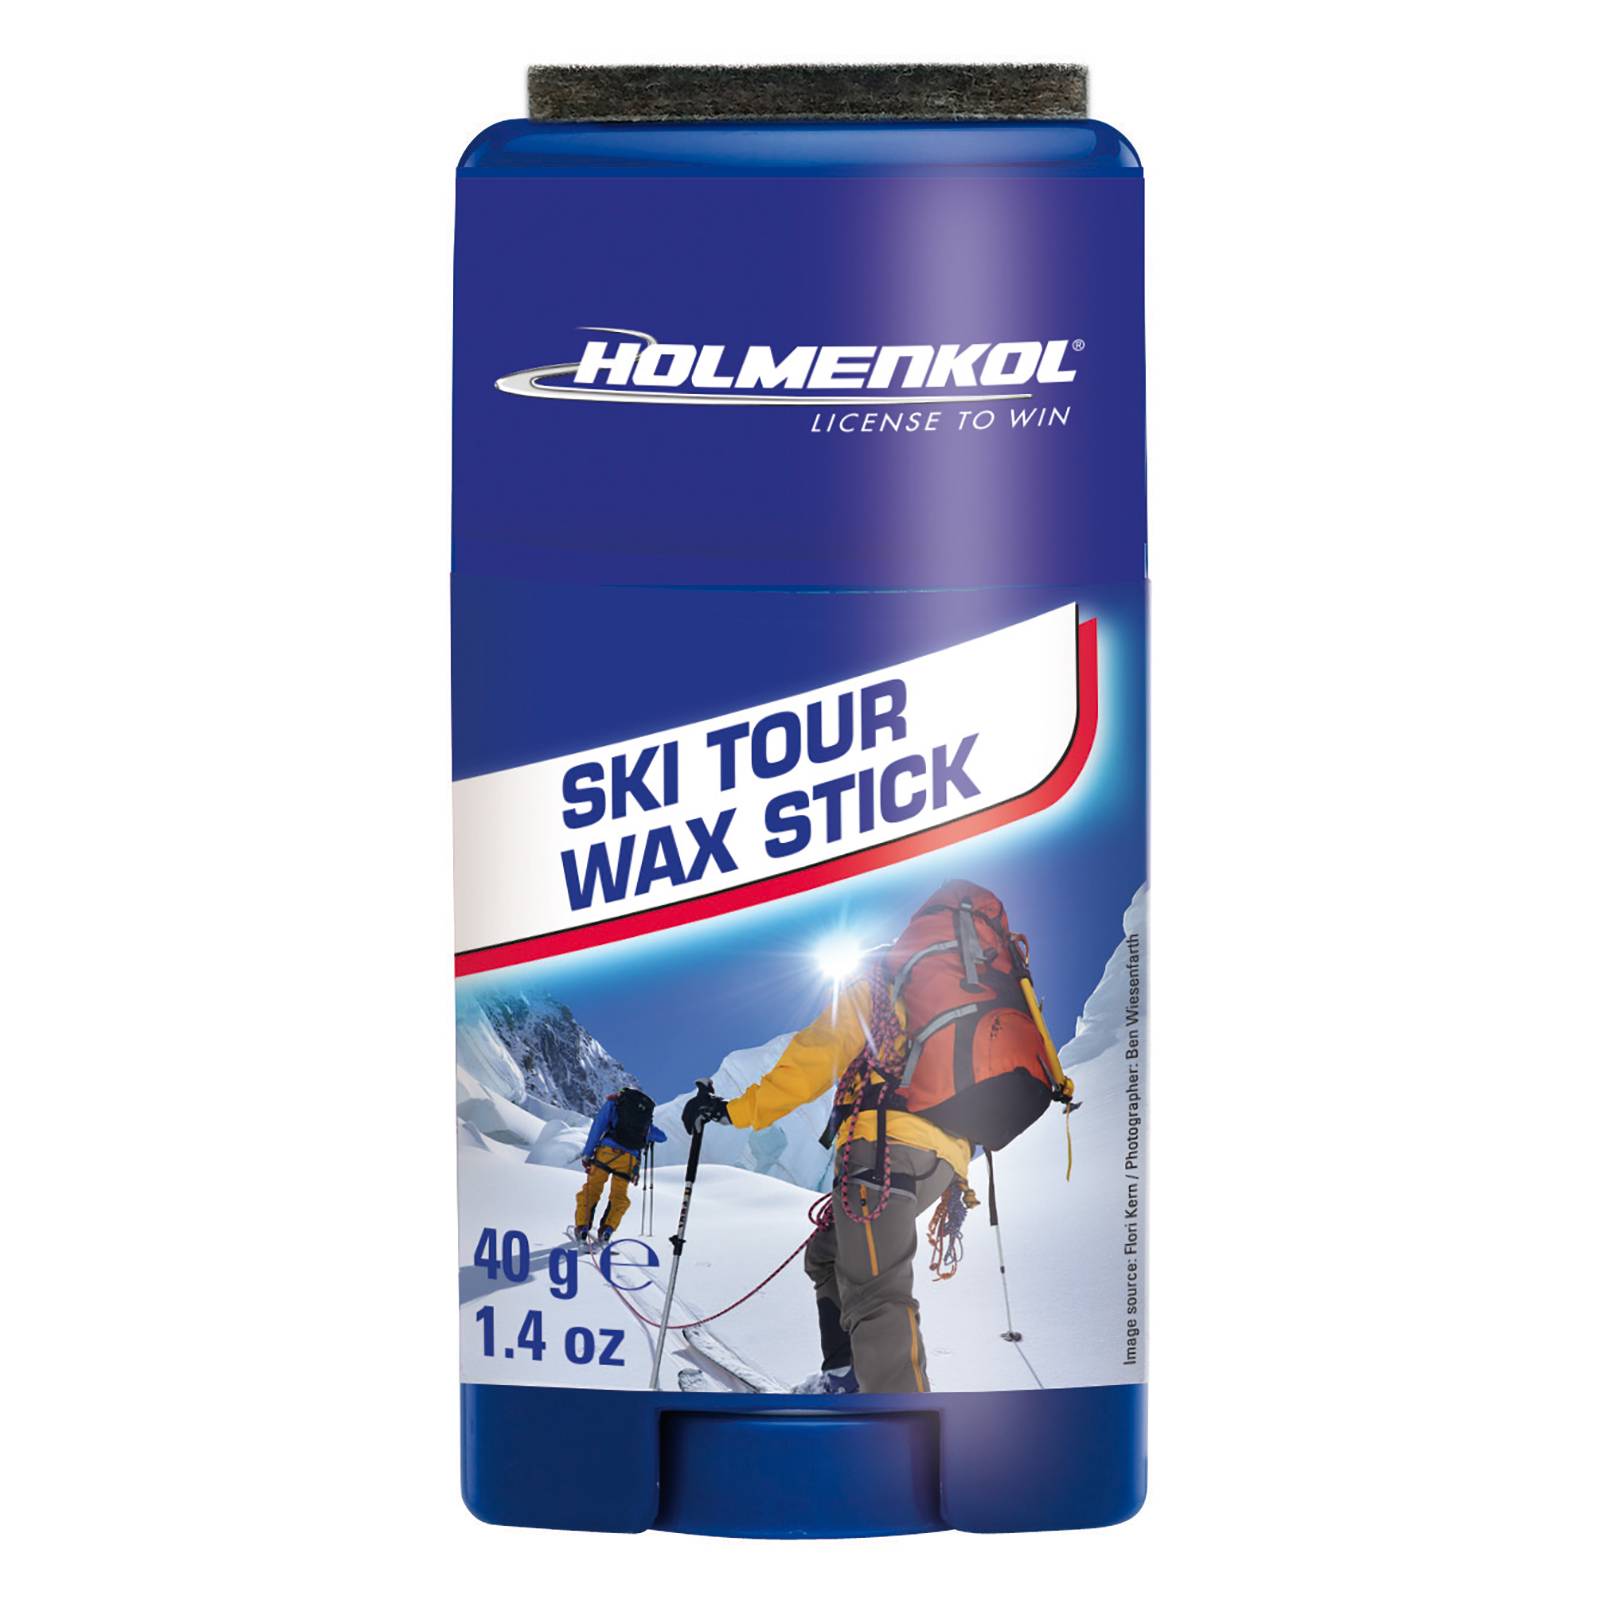 Holmenkol Ski Tour Wax Stick Skiwachs - 40g